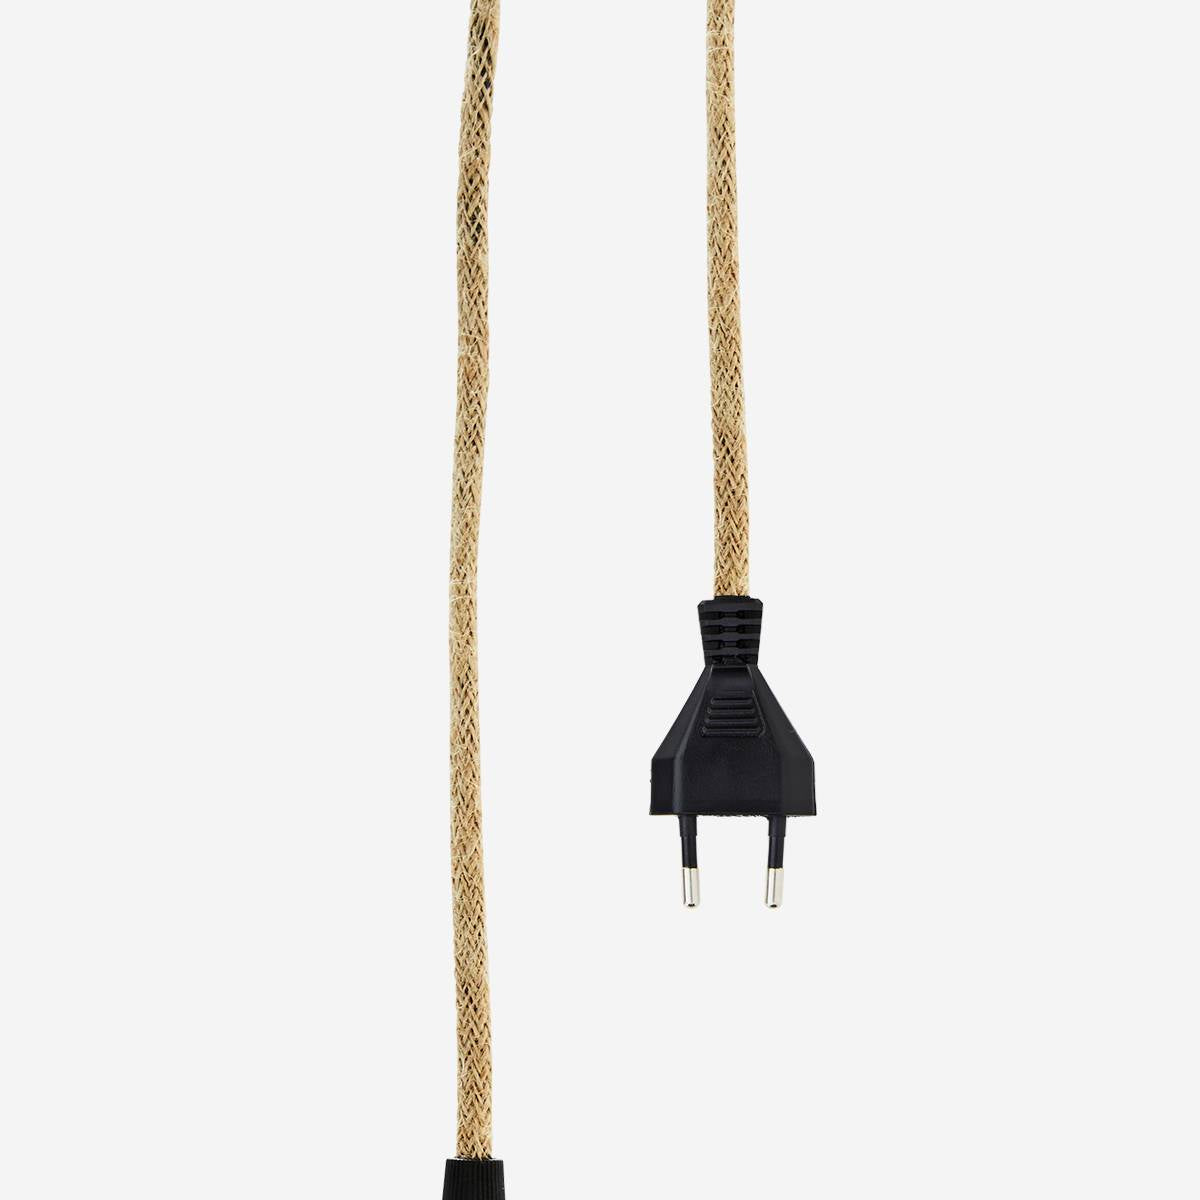 Suspension douille laiton - cable corde naturel - prise